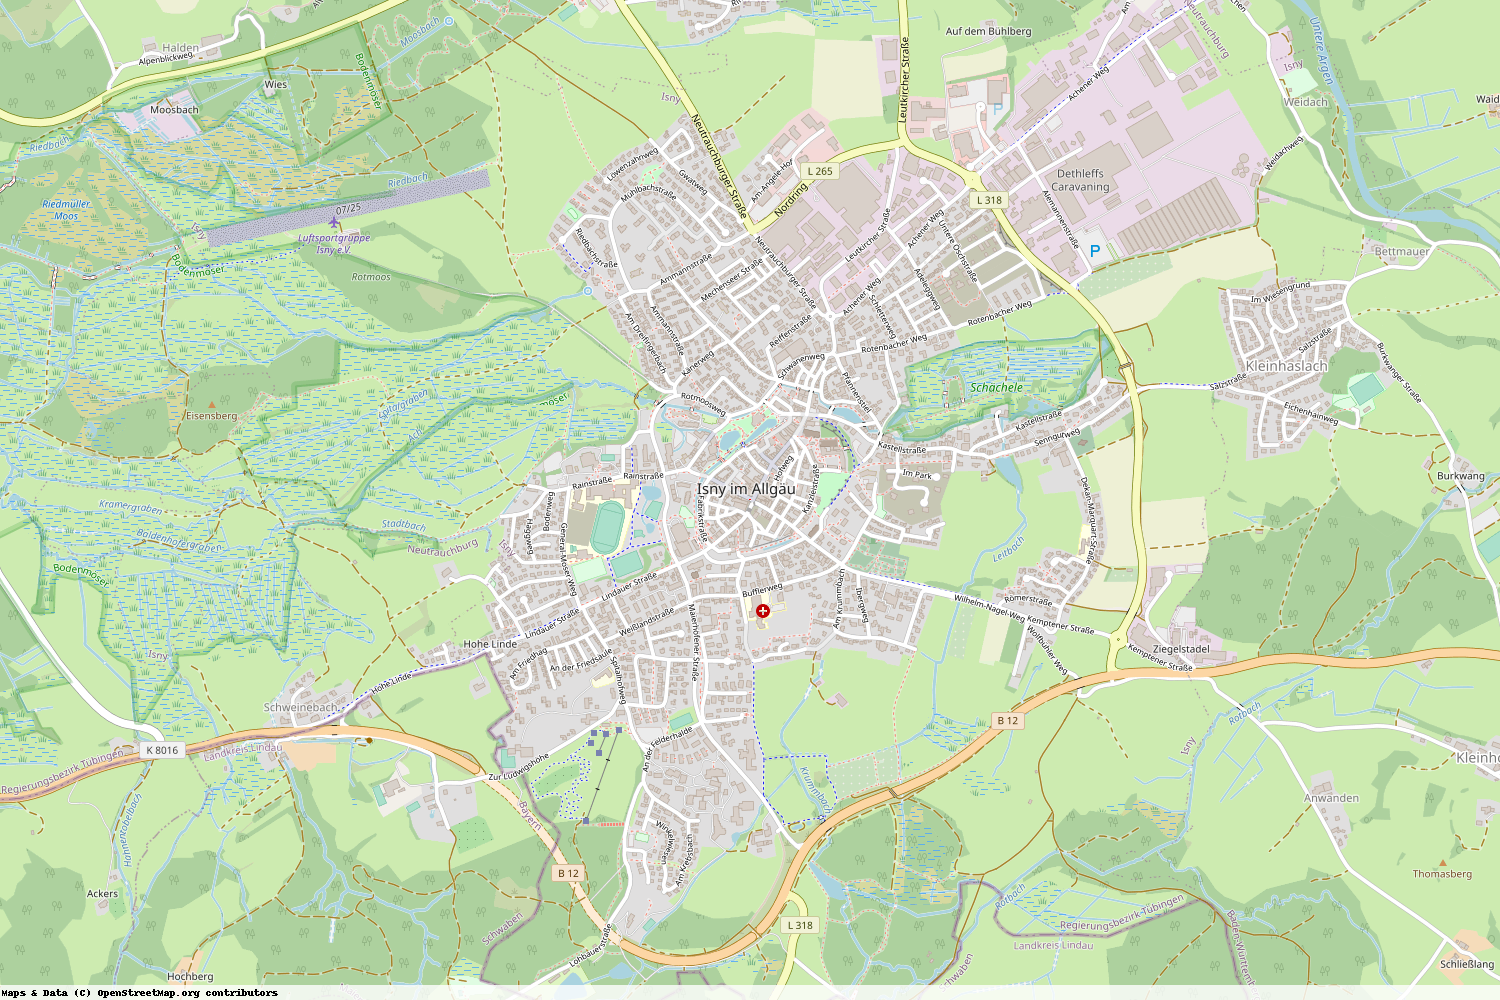 Ist gerade Stromausfall in Baden-Württemberg - Ravensburg - Isny im Allgäu?